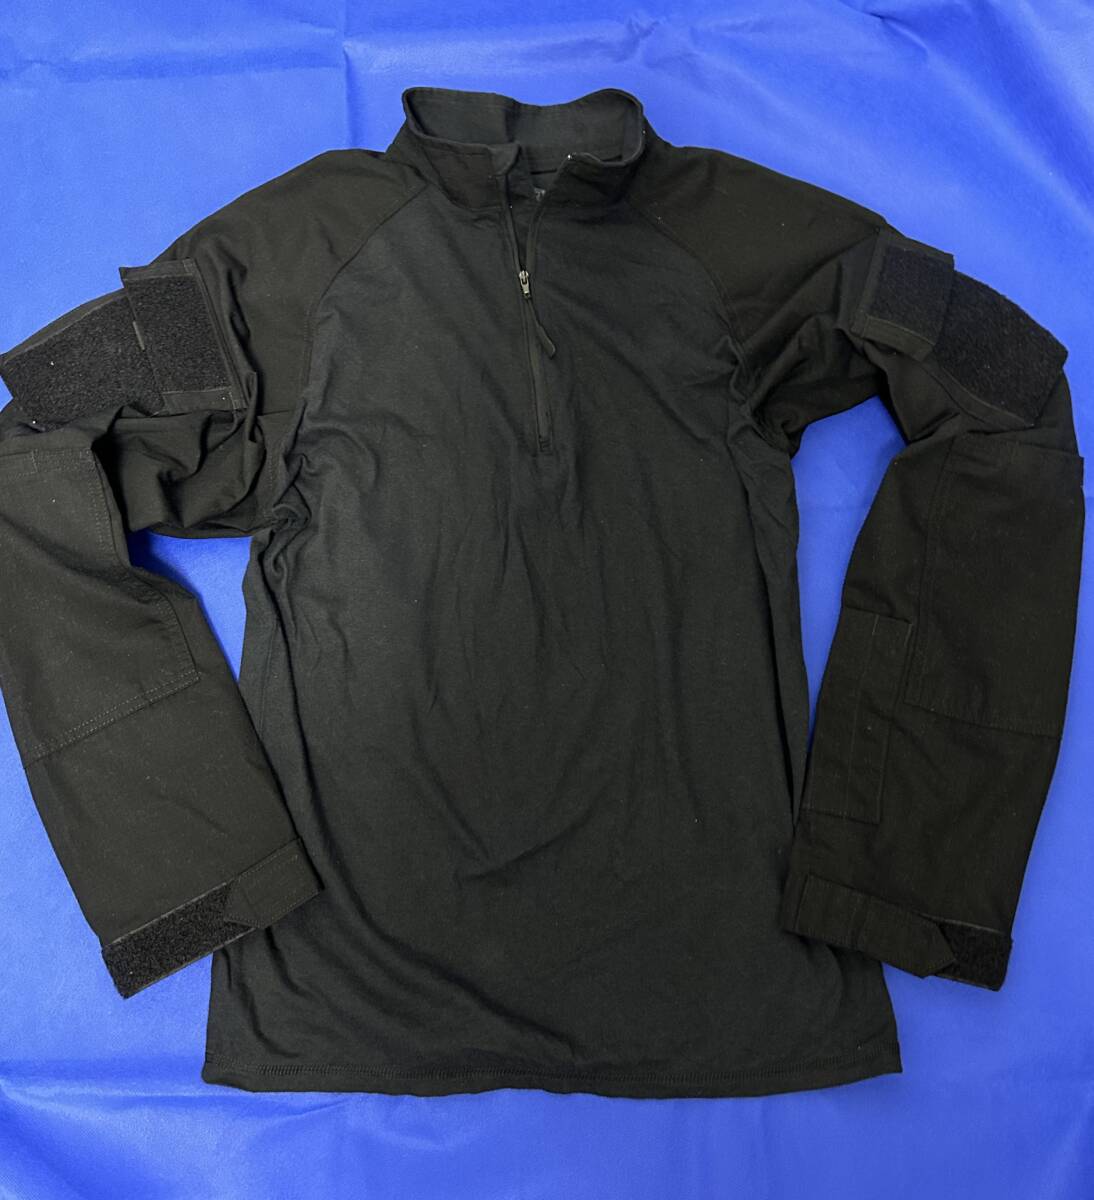 TRU-SPEC ”TRU” ジップ コンバットシャツ ブラック Mサイズの画像1